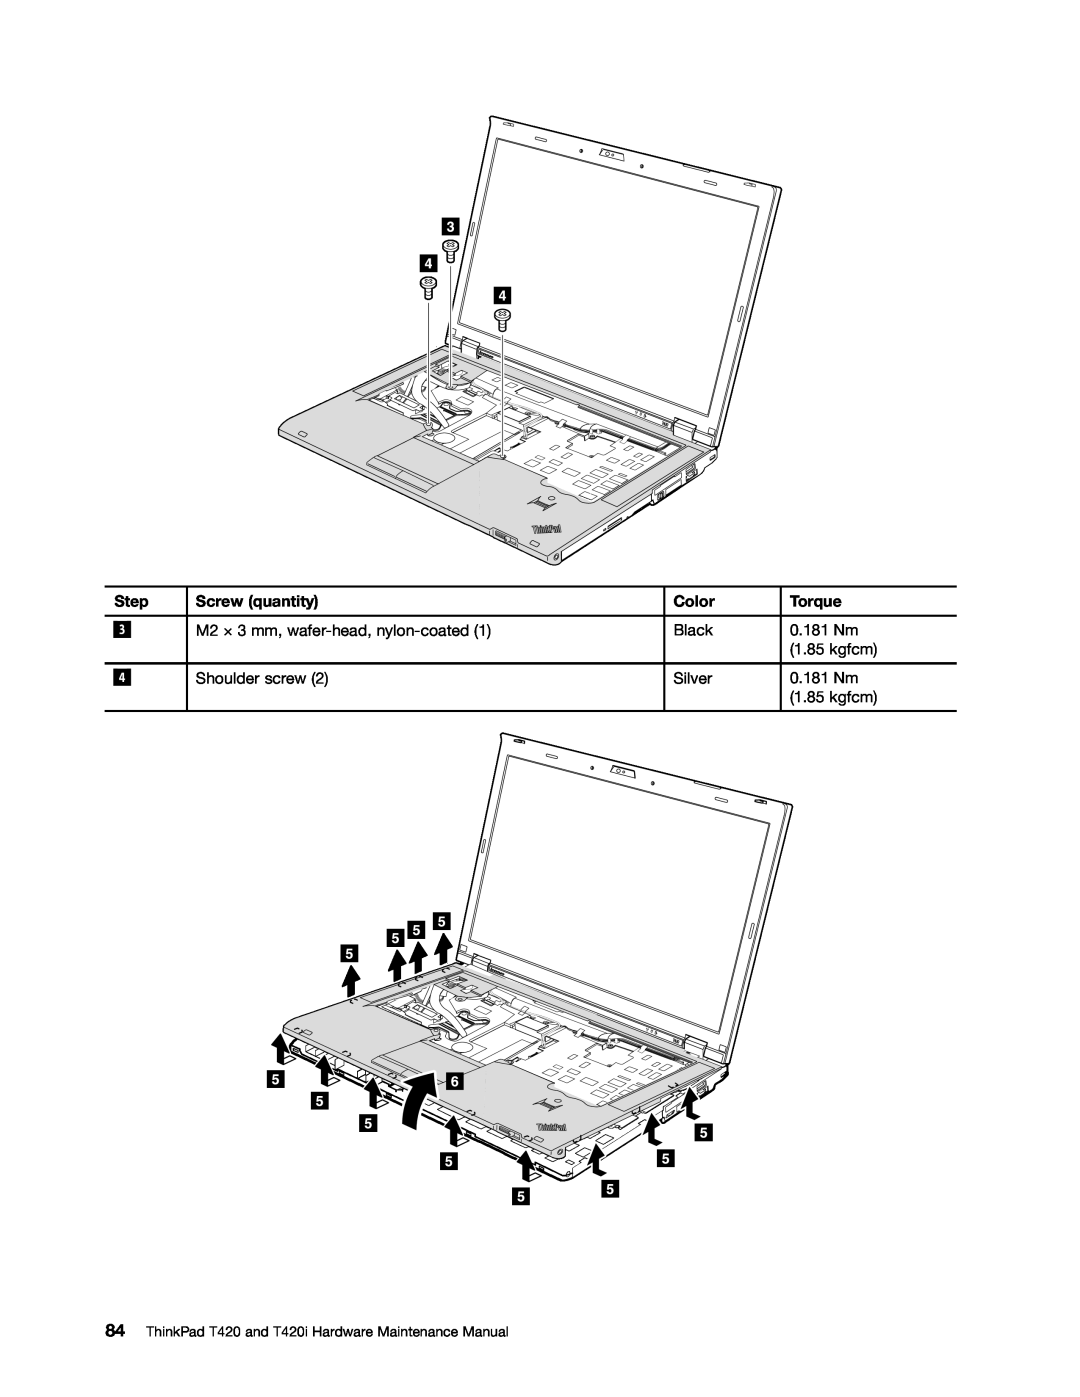 Lenovo manual Step, Screw quantity, Color, Torque, ThinkPad T420 and T420i Hardware Maintenance Manual 